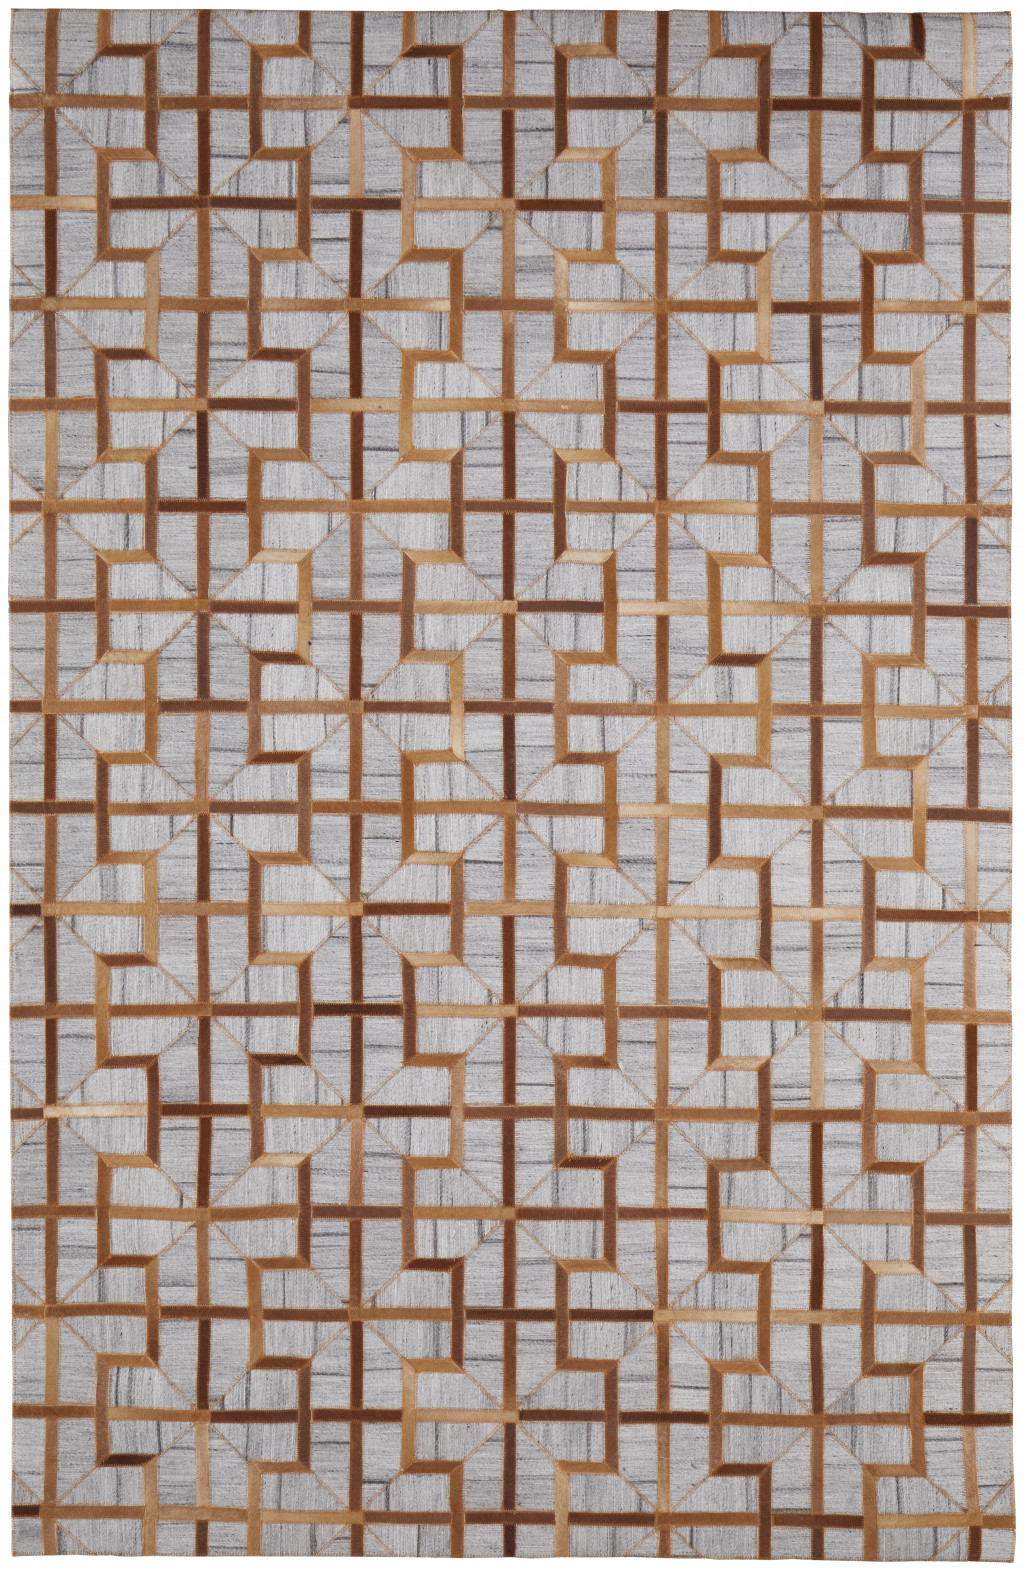 10' X 13' Tan Brown And Gray Geometric Hand Woven Area Rug-511810-1